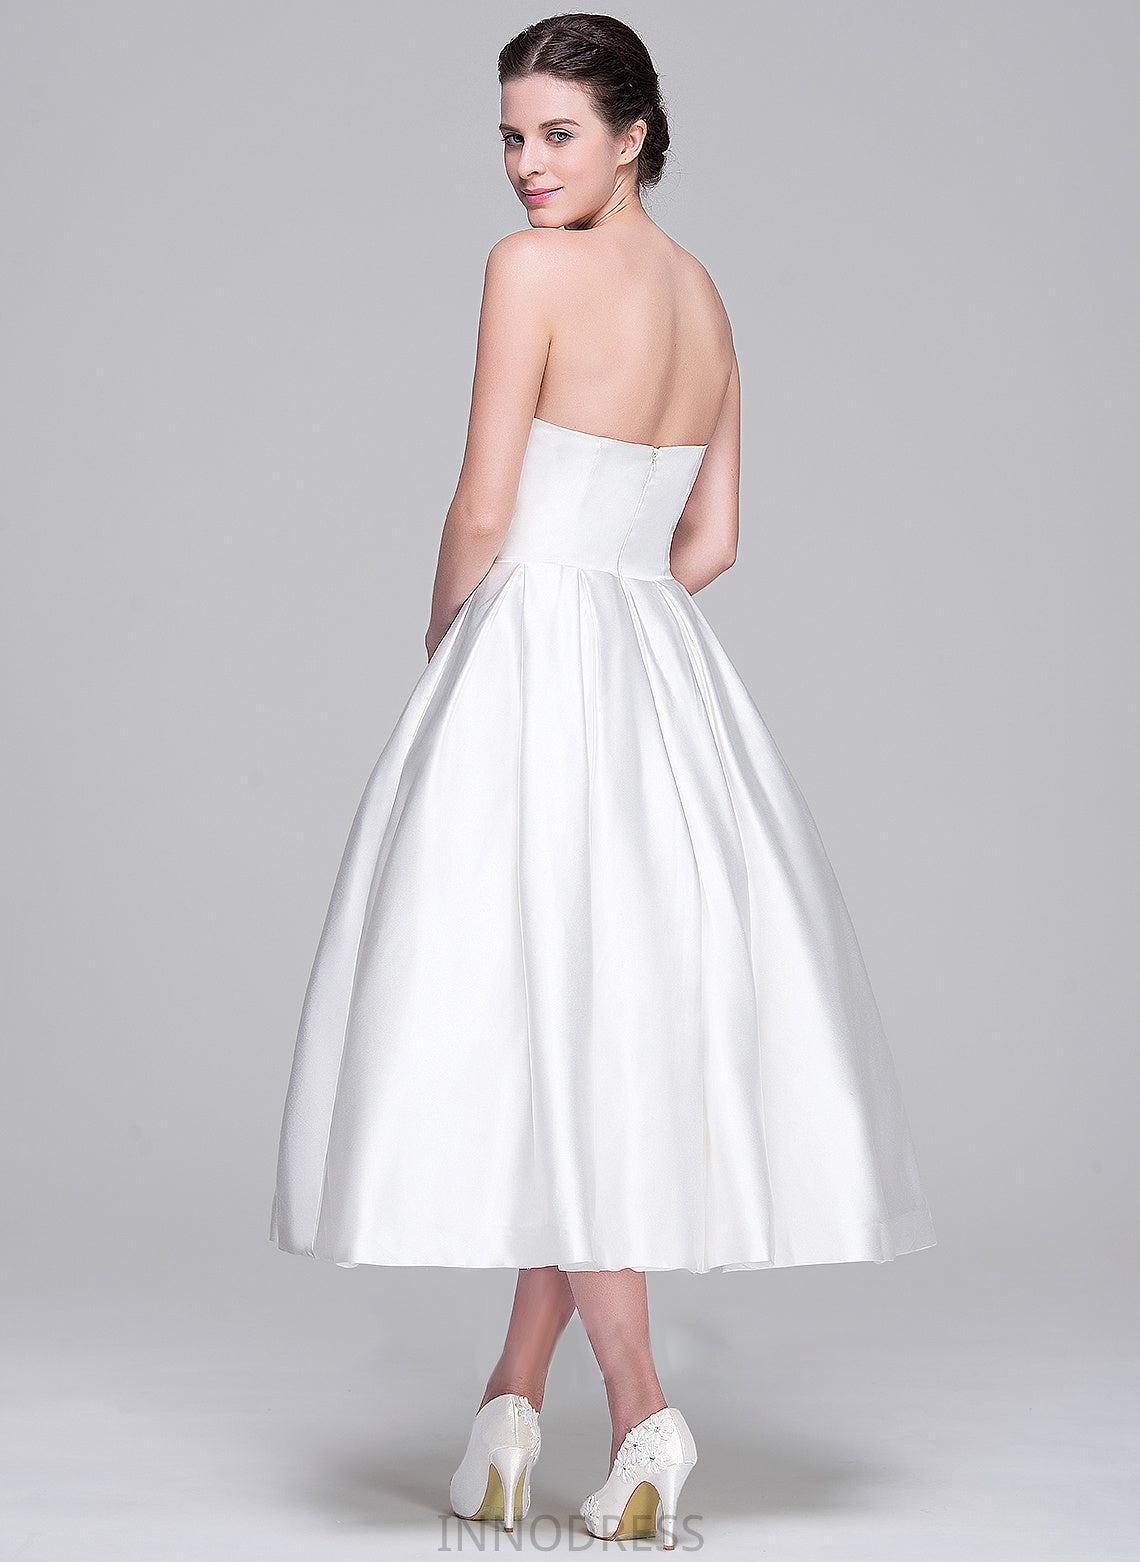 Dress Wedding Pockets With Ball-Gown/Princess Satin Anabel Tea-Length Sweetheart Wedding Dresses